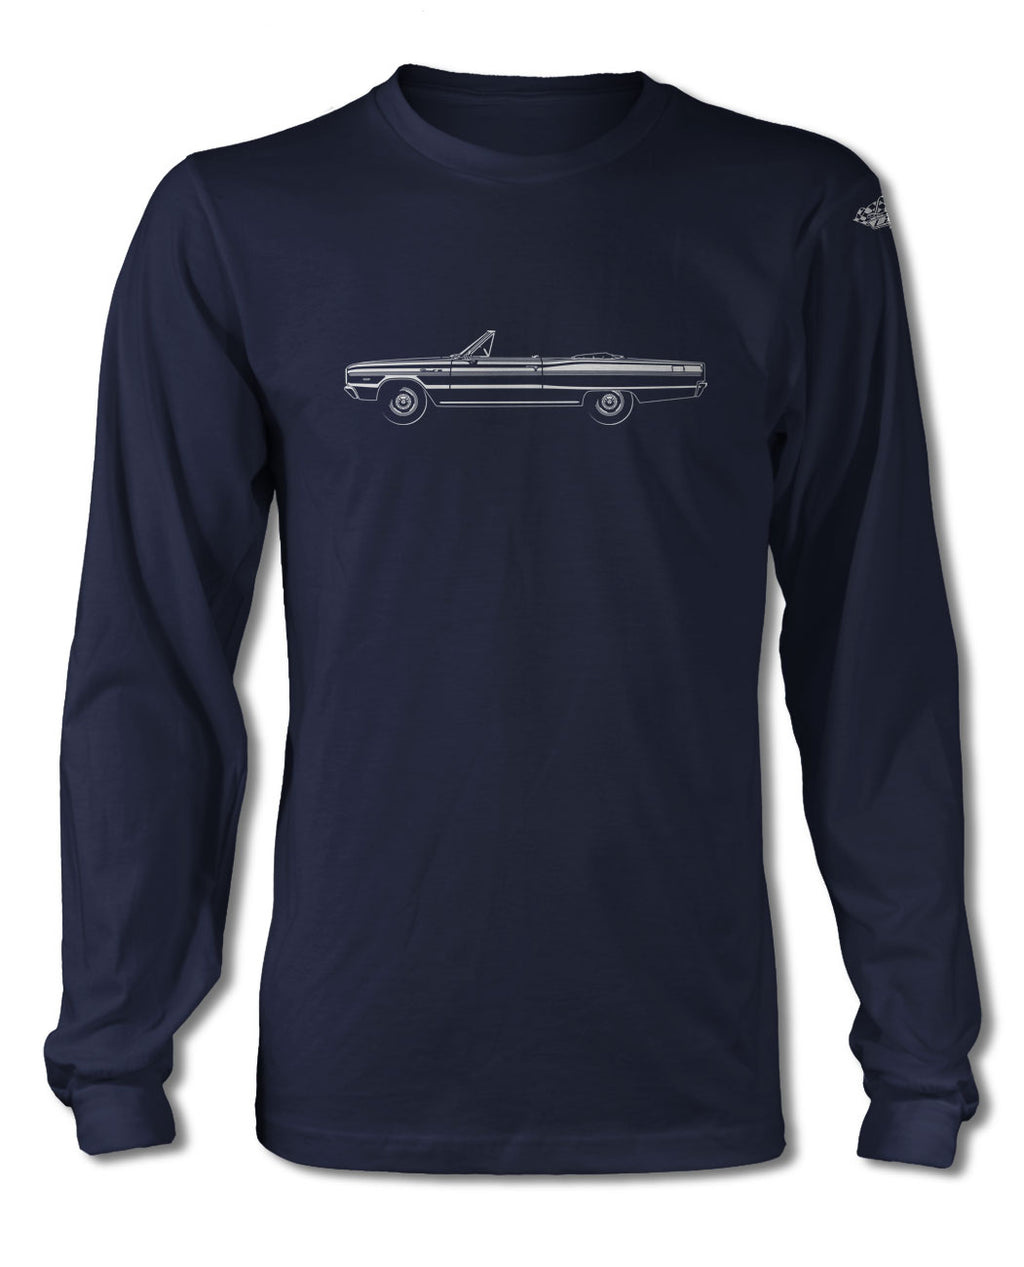 1966 Dodge Coronet 440 426 Hemi Convertible T-Shirt - Long Sleeves - Side View